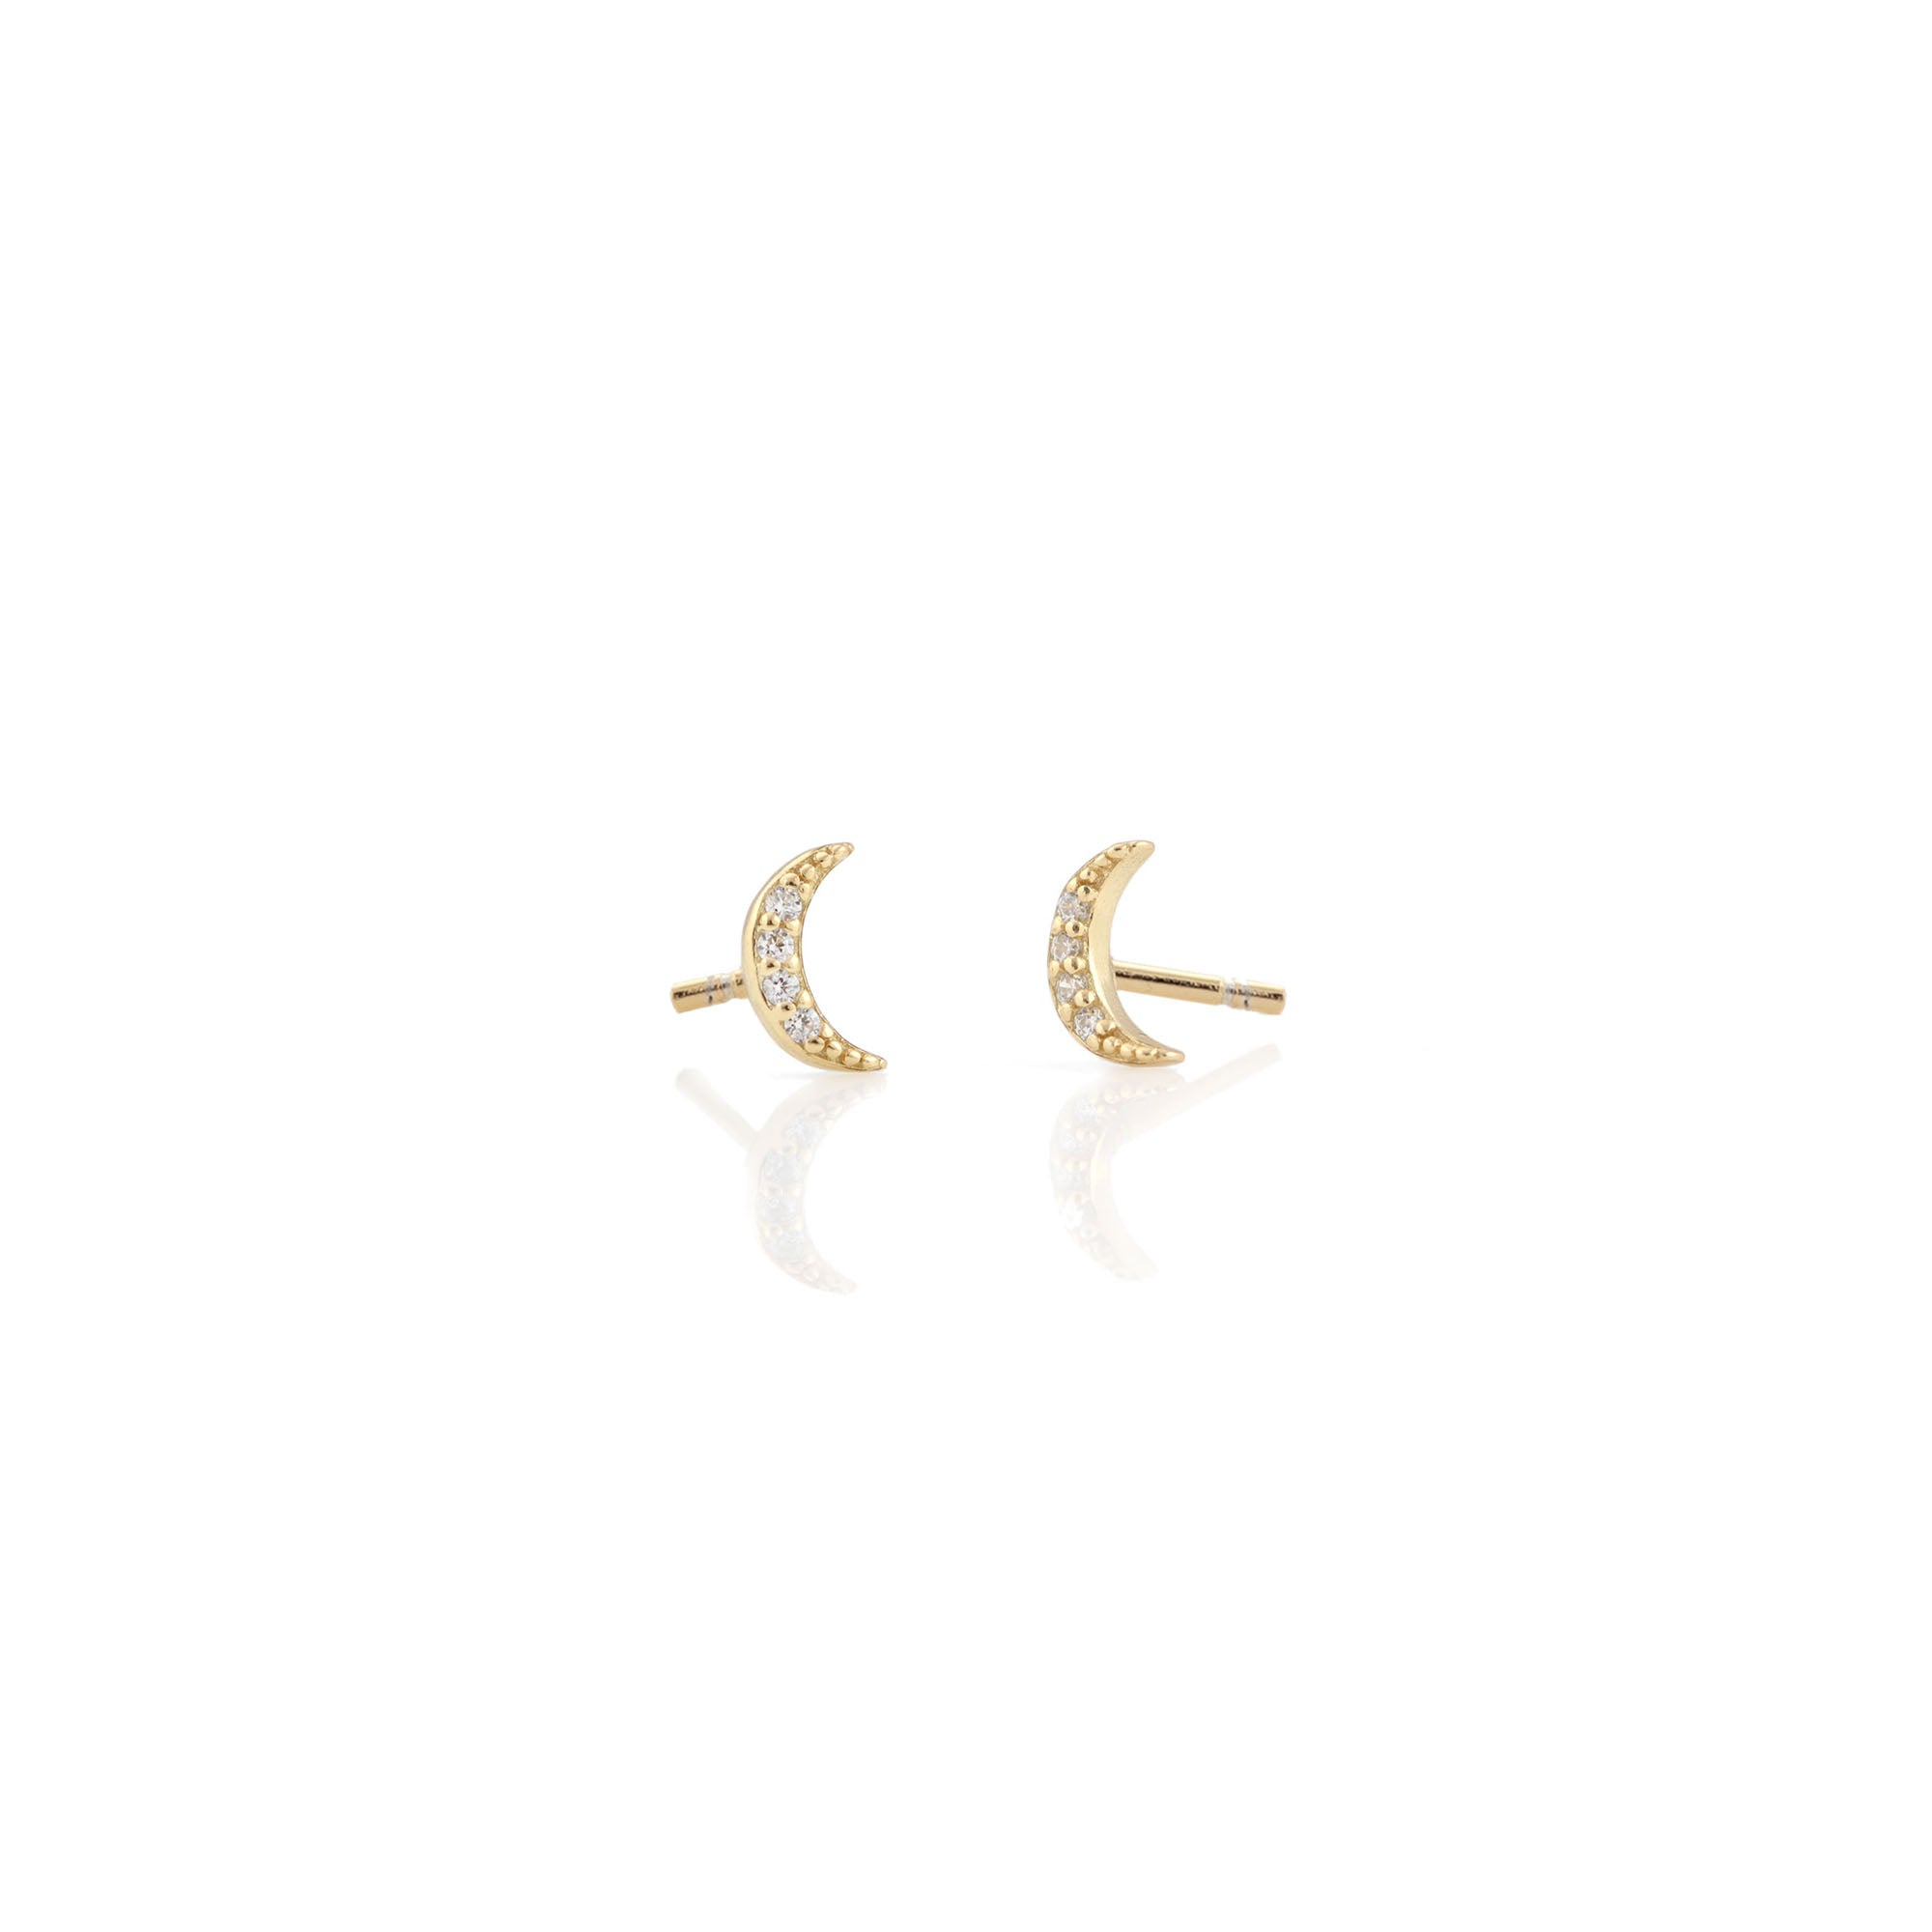 Crescent Moon Crystal Stud Earrings